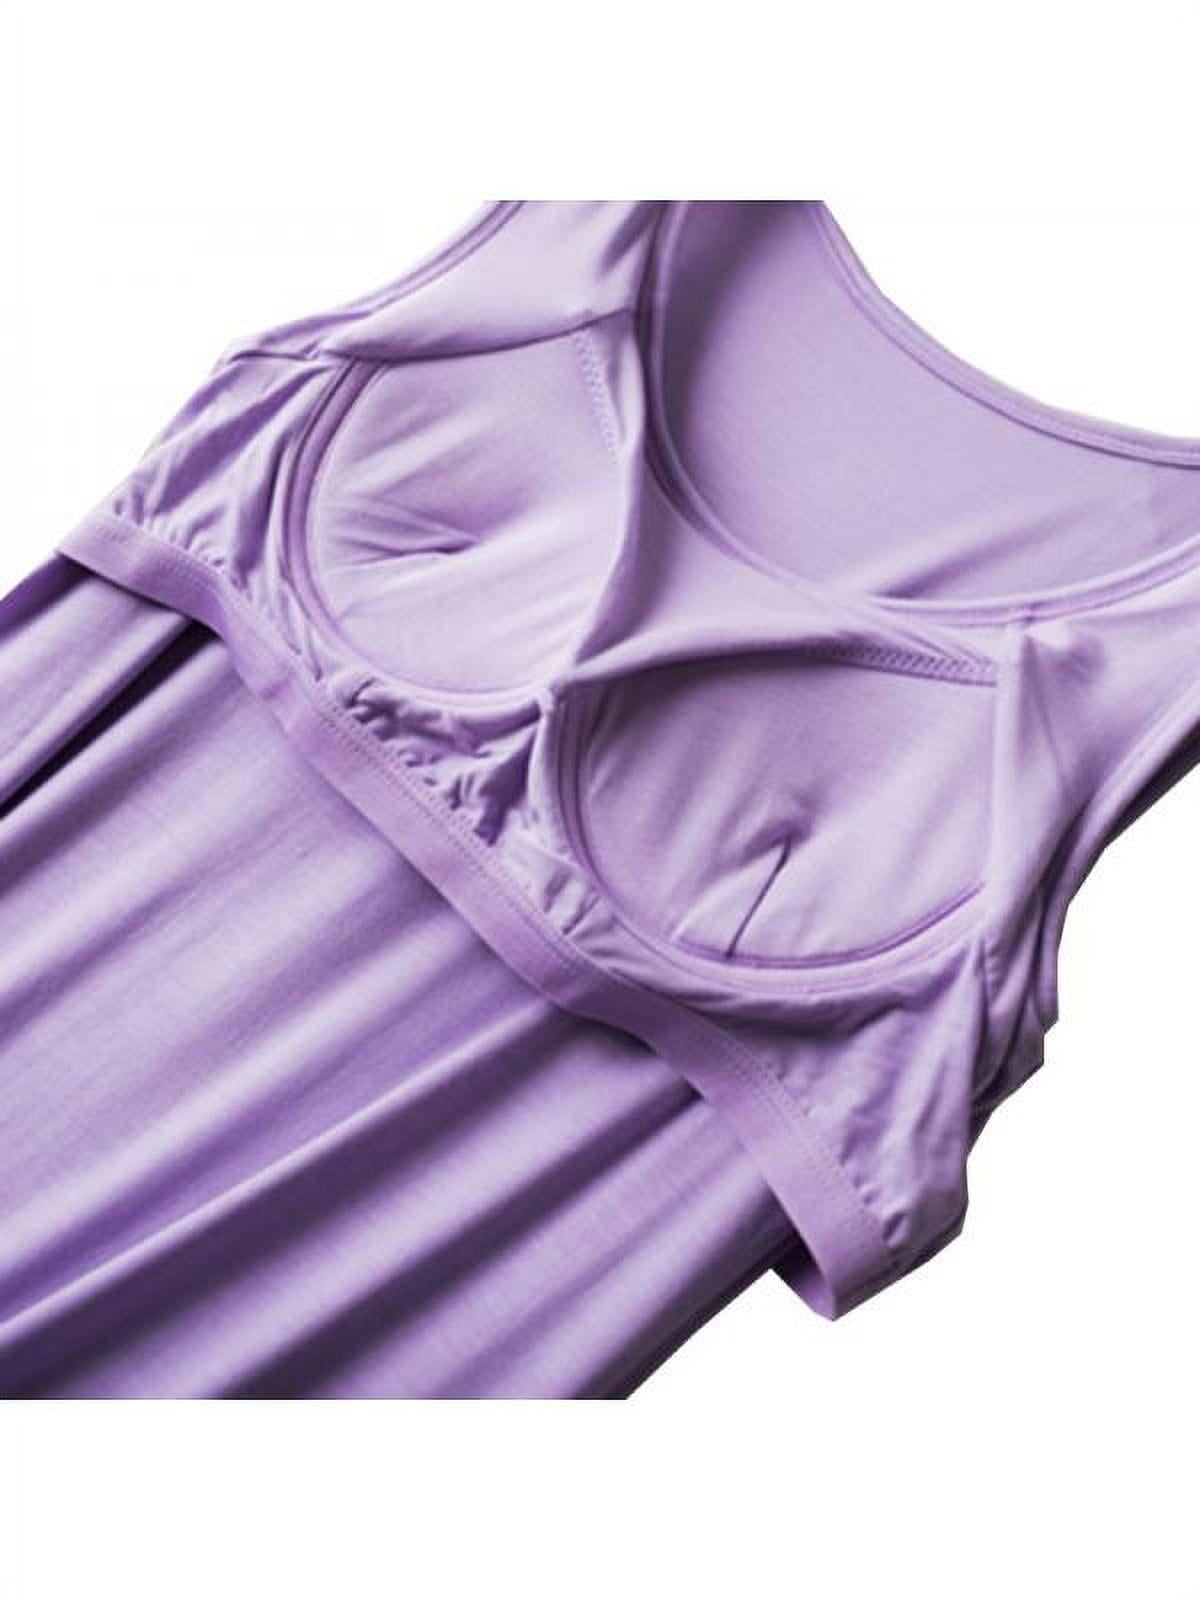 Women Built-in Bra Sleeveless Tank Top Sleepwear Padded Long Pajamas  Nightdress,Summer Thin Shelf Bra Camisole Nightshirt Dress Nightgown,Knee  Length Casual Modal Full Slip Sleep Shirt,Purple S-5XL 